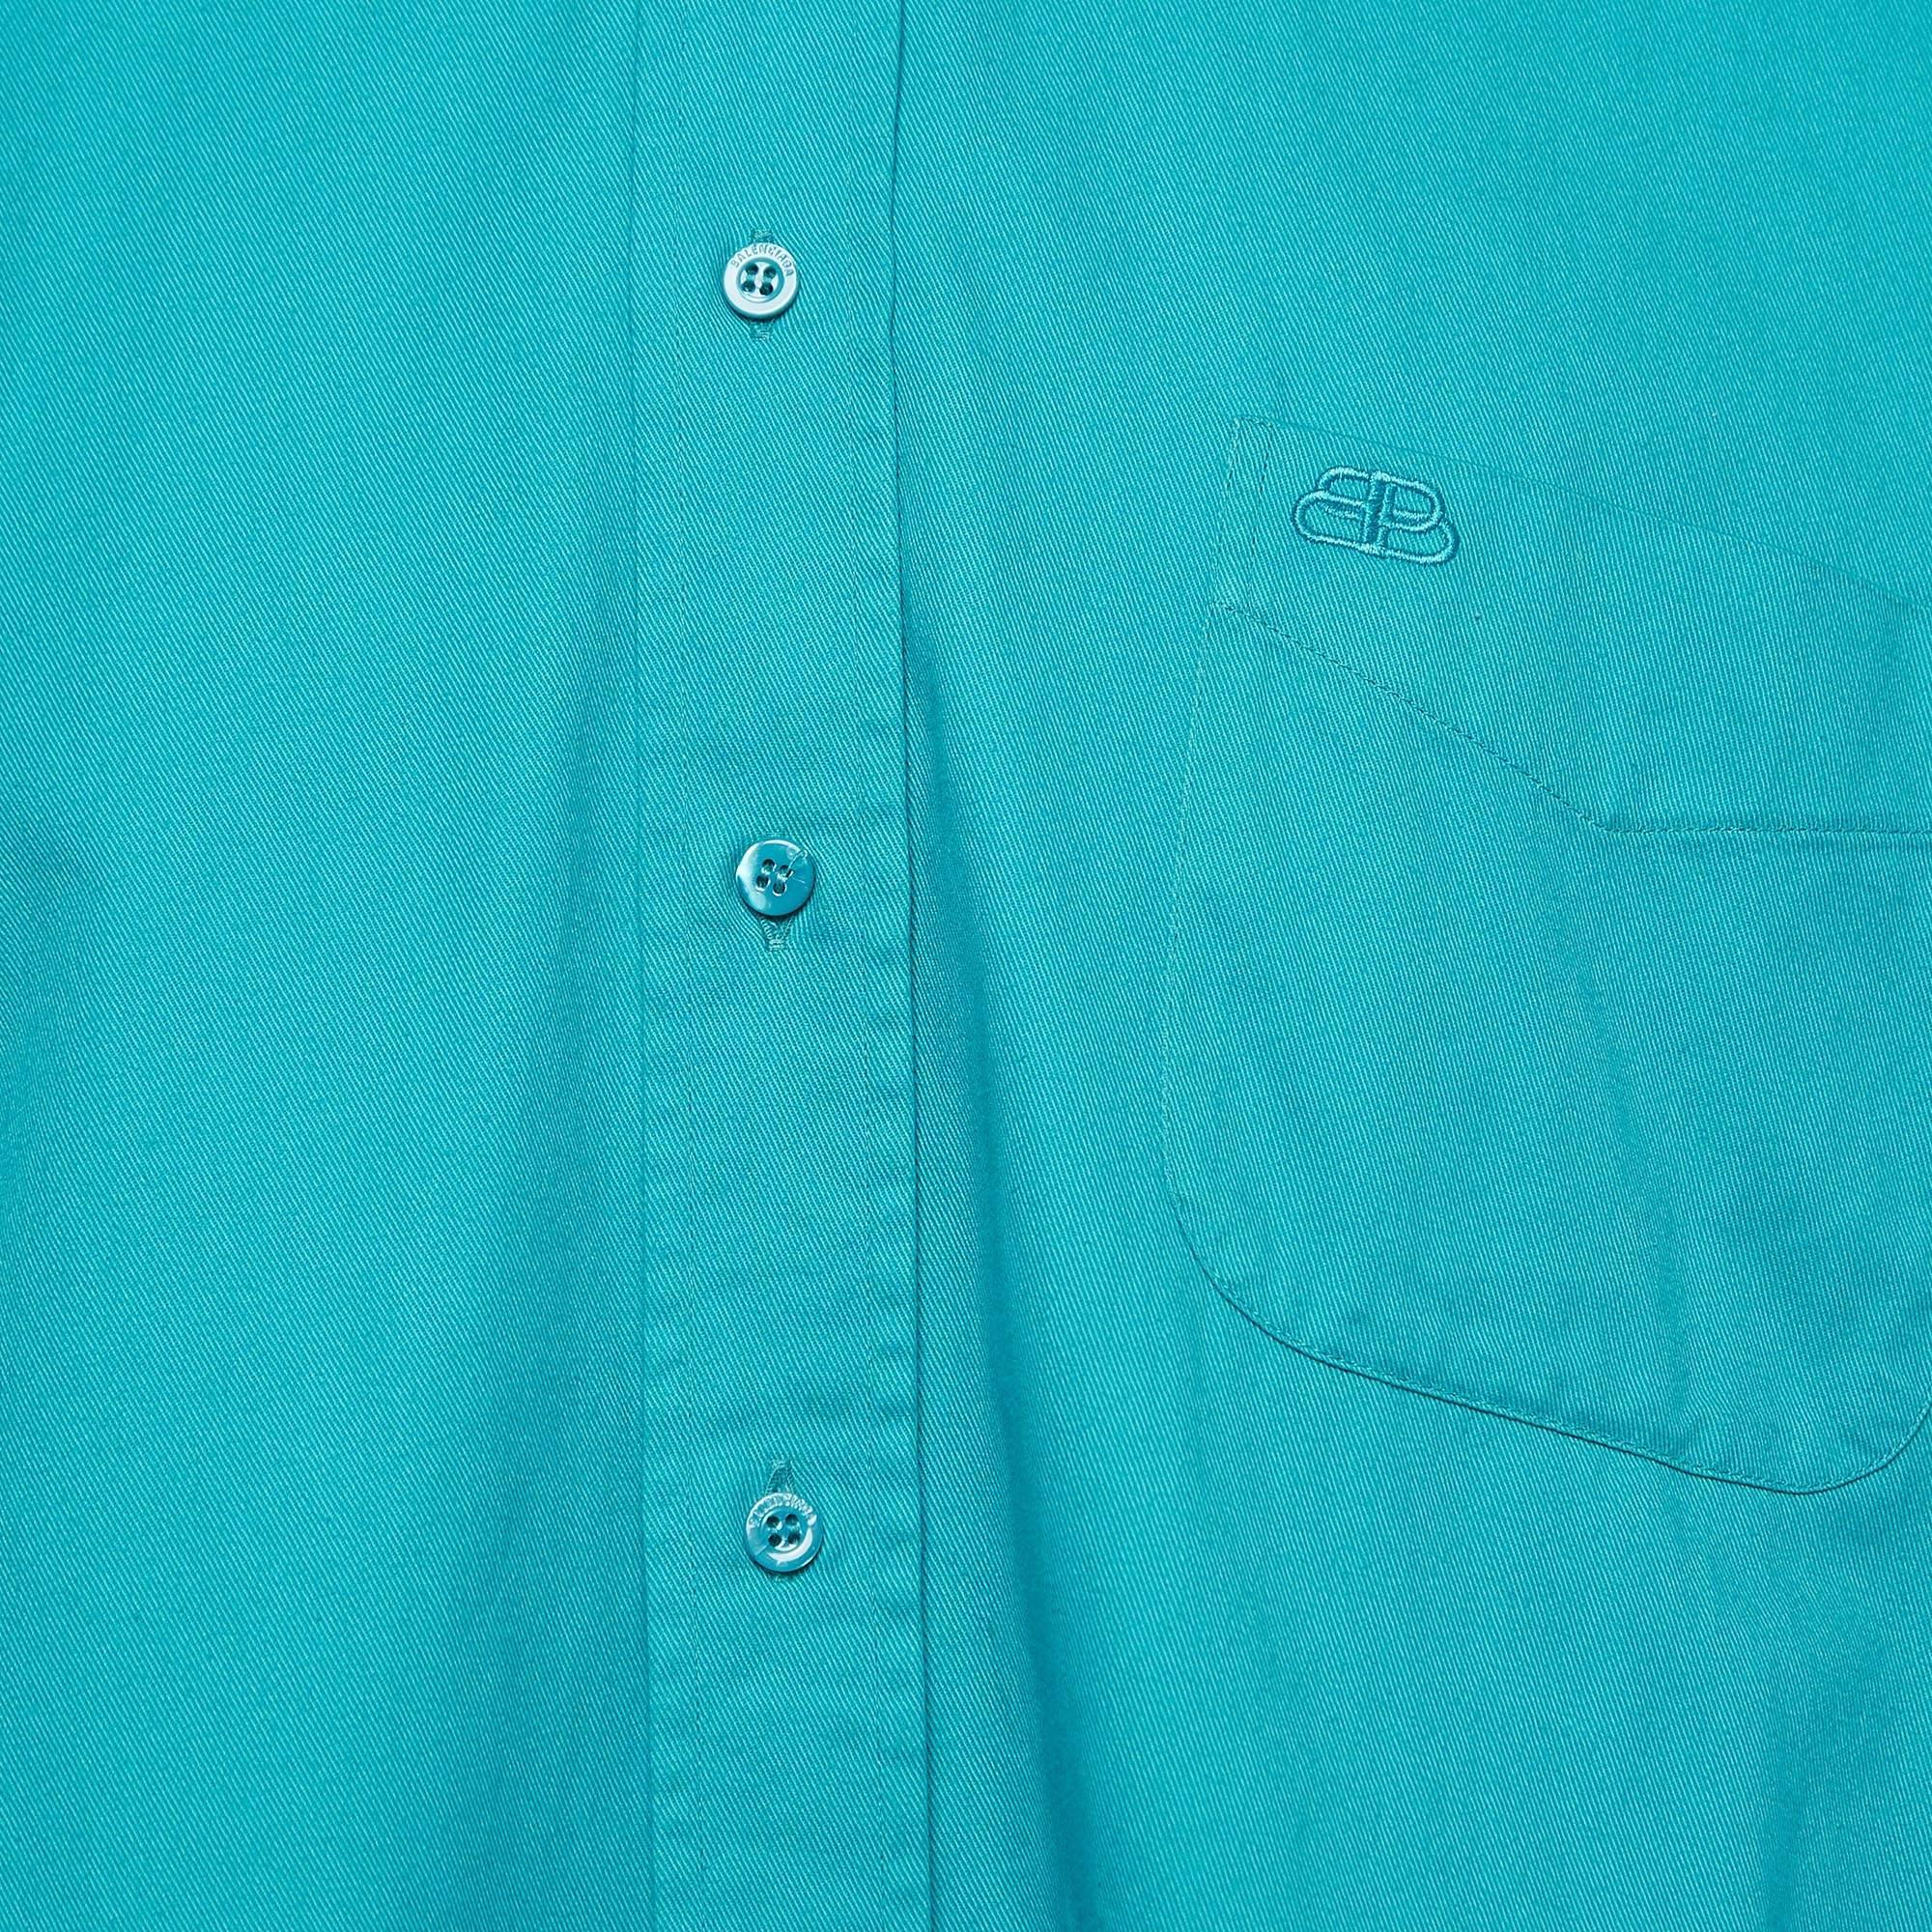 Balenciaga Teal Green Cotton Oversized Shirt XS In Excellent Condition For Sale In Dubai, Al Qouz 2